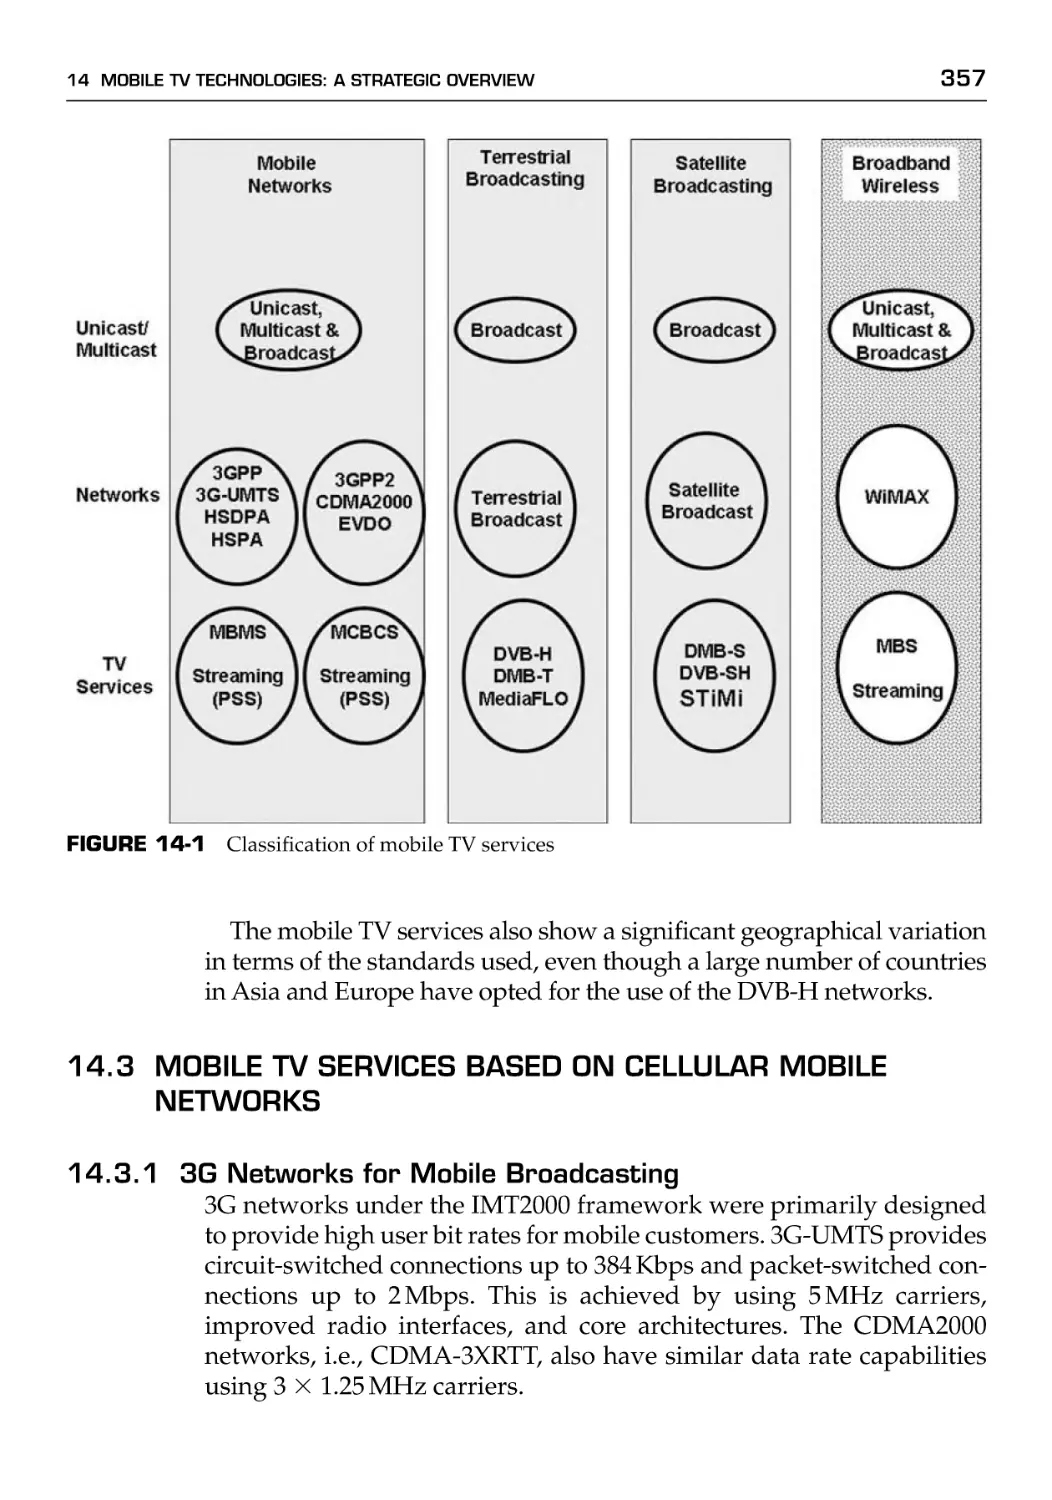 14.3 Mobile TV Services Based on Cellular Mobile Networks